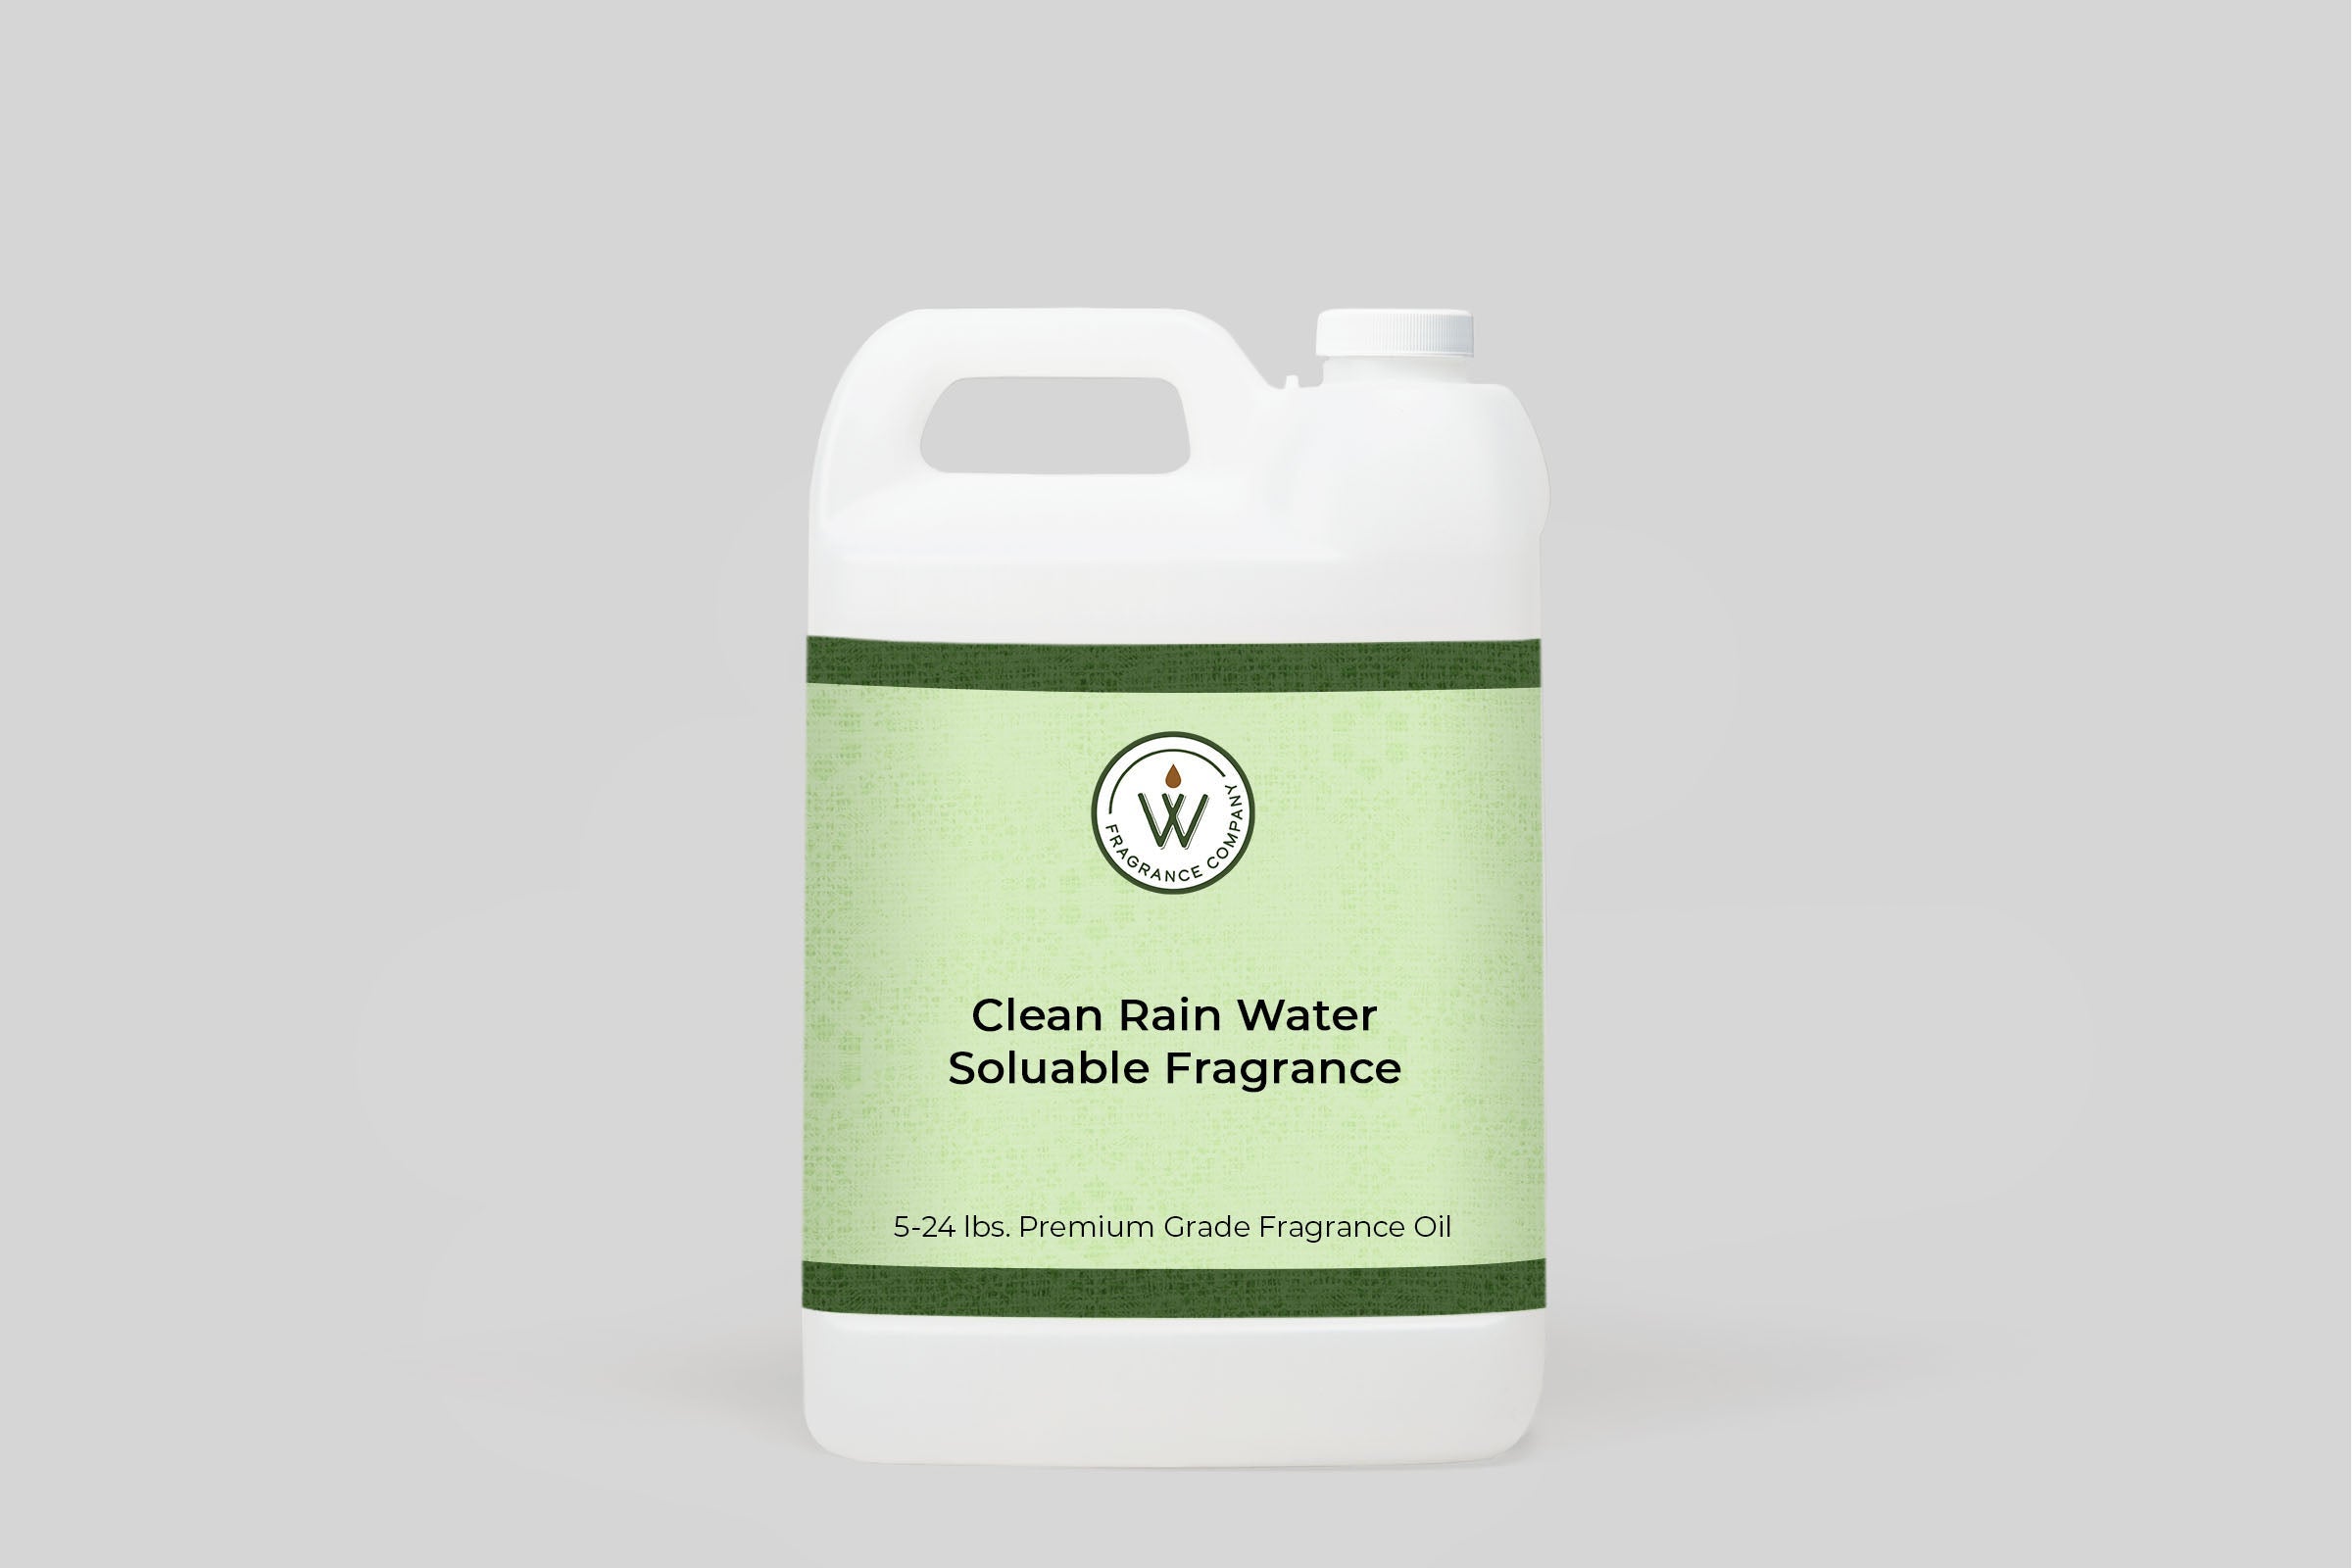 Clean Rain Water Soluble Fragrance